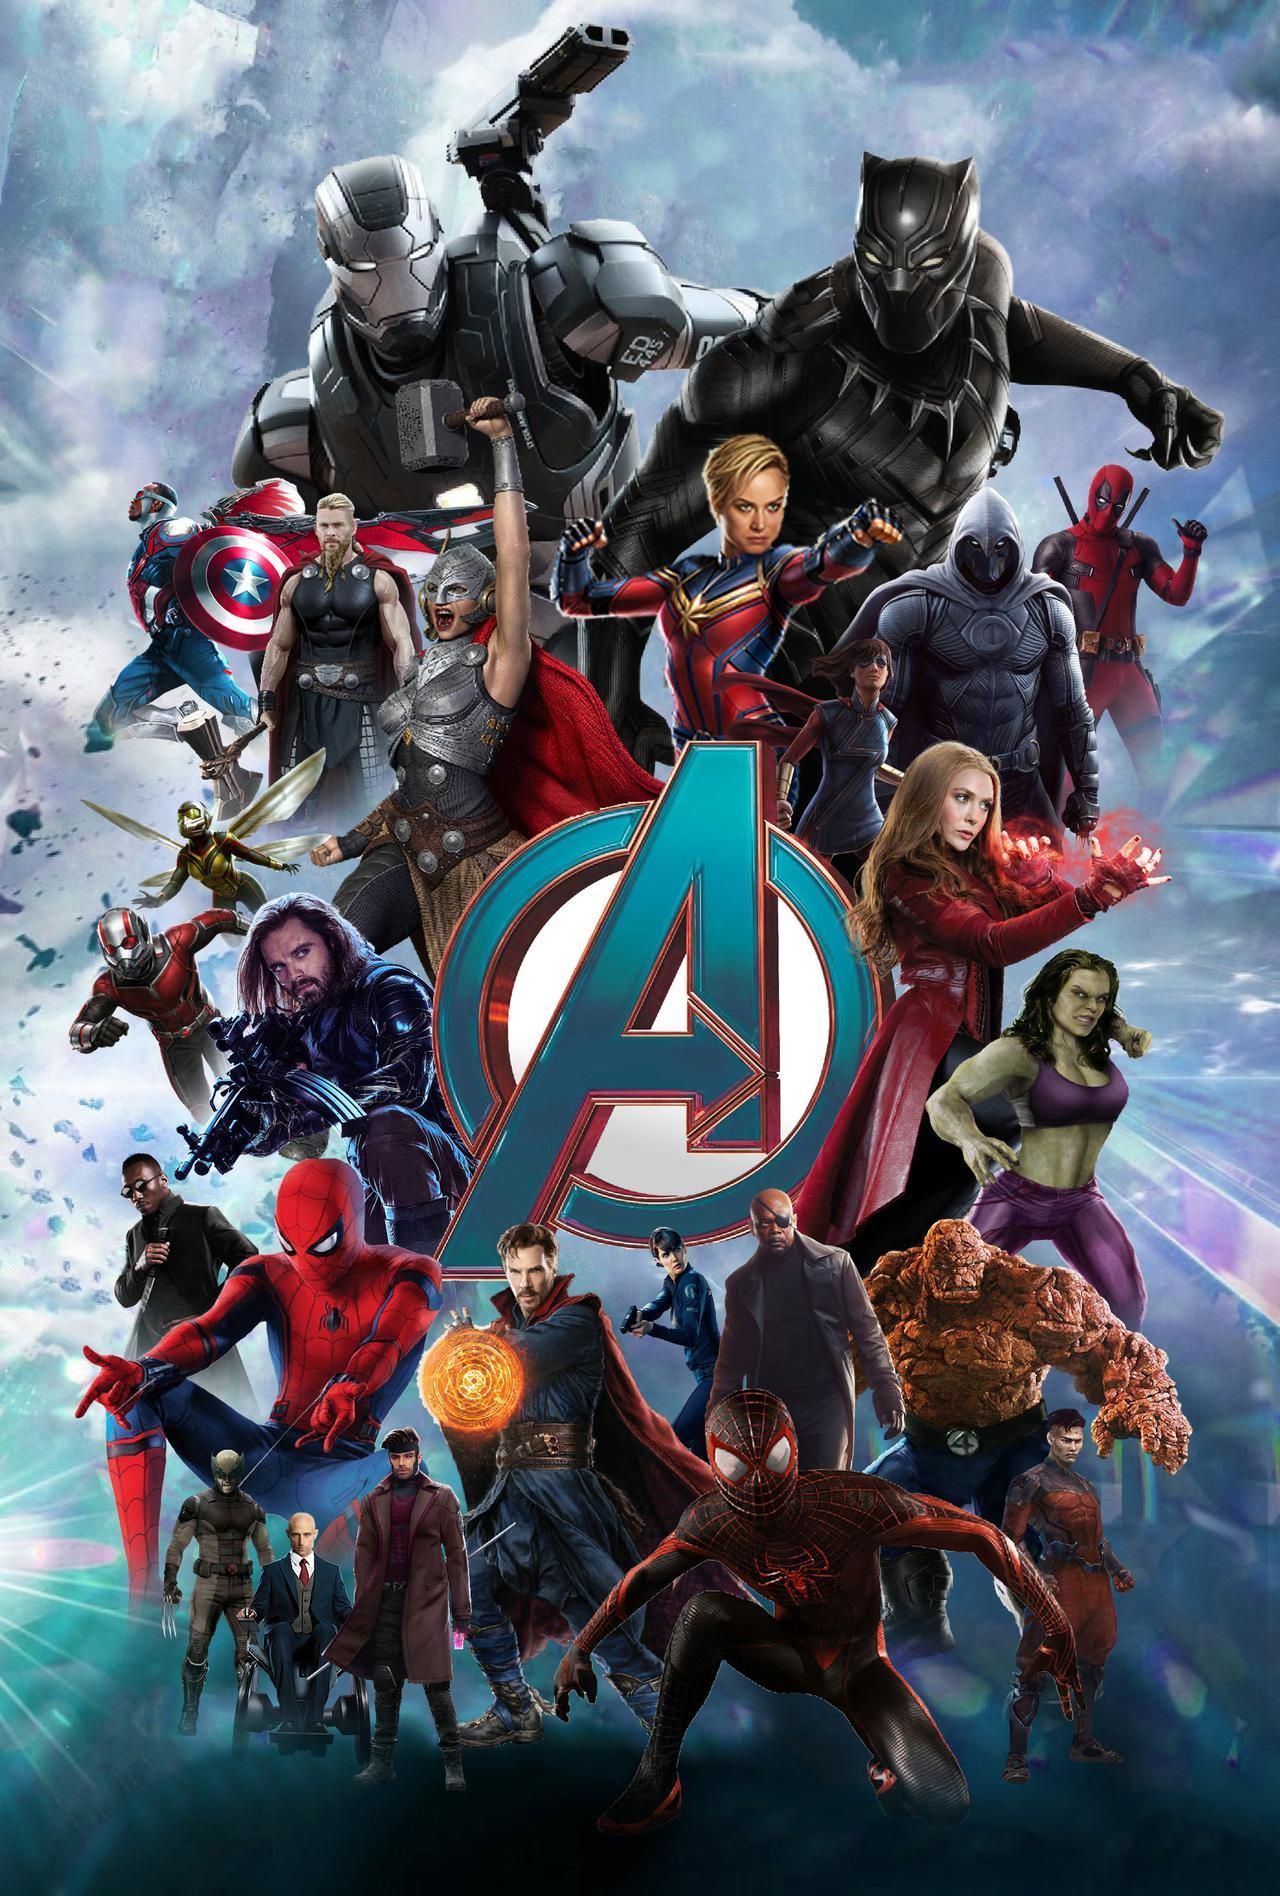 MCU Phase 5 Concept Poster By SUPER FRAME. Marvel Comics Wallpaper, Marvel Superhero Posters, Avengers Wallpaper